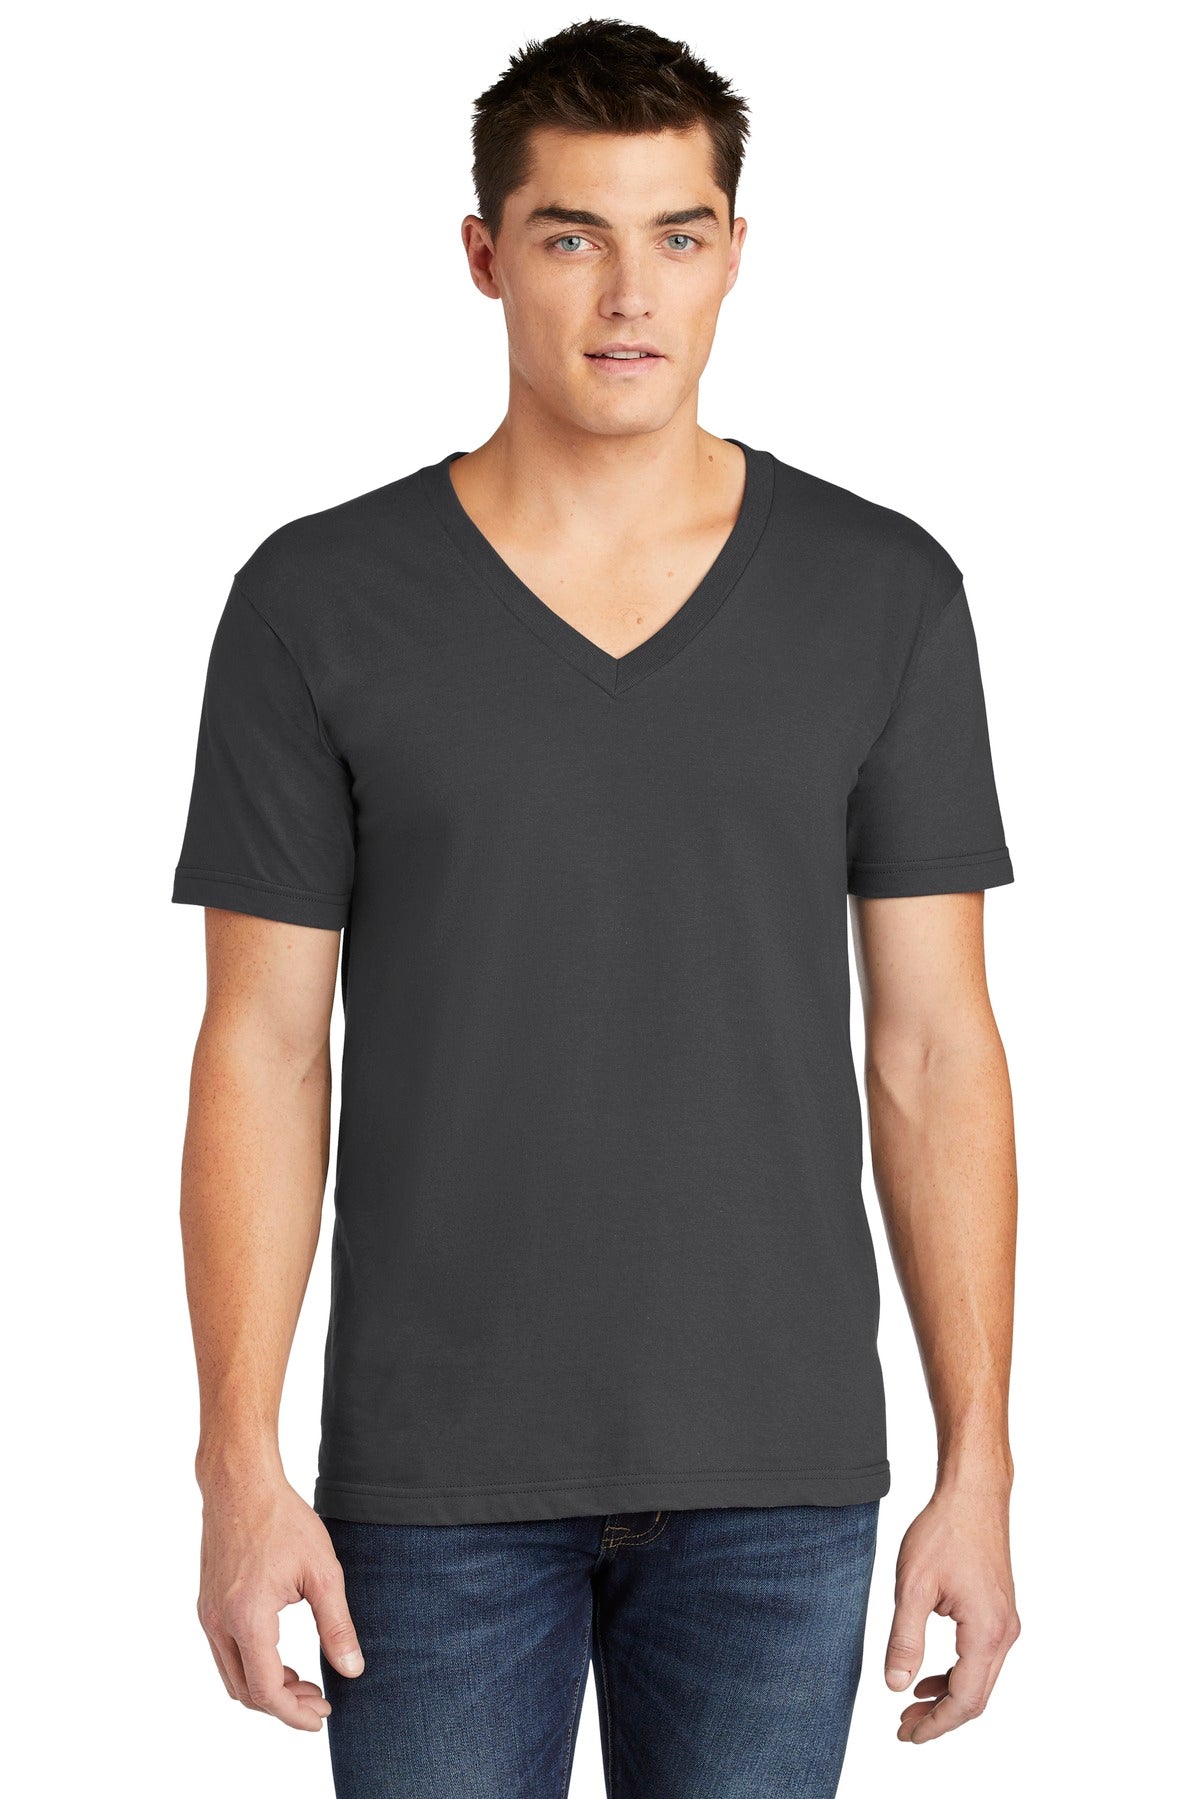 American Apparel ® Fine Jersey V-Neck T-Shirt. 2456W - Westside Stitch